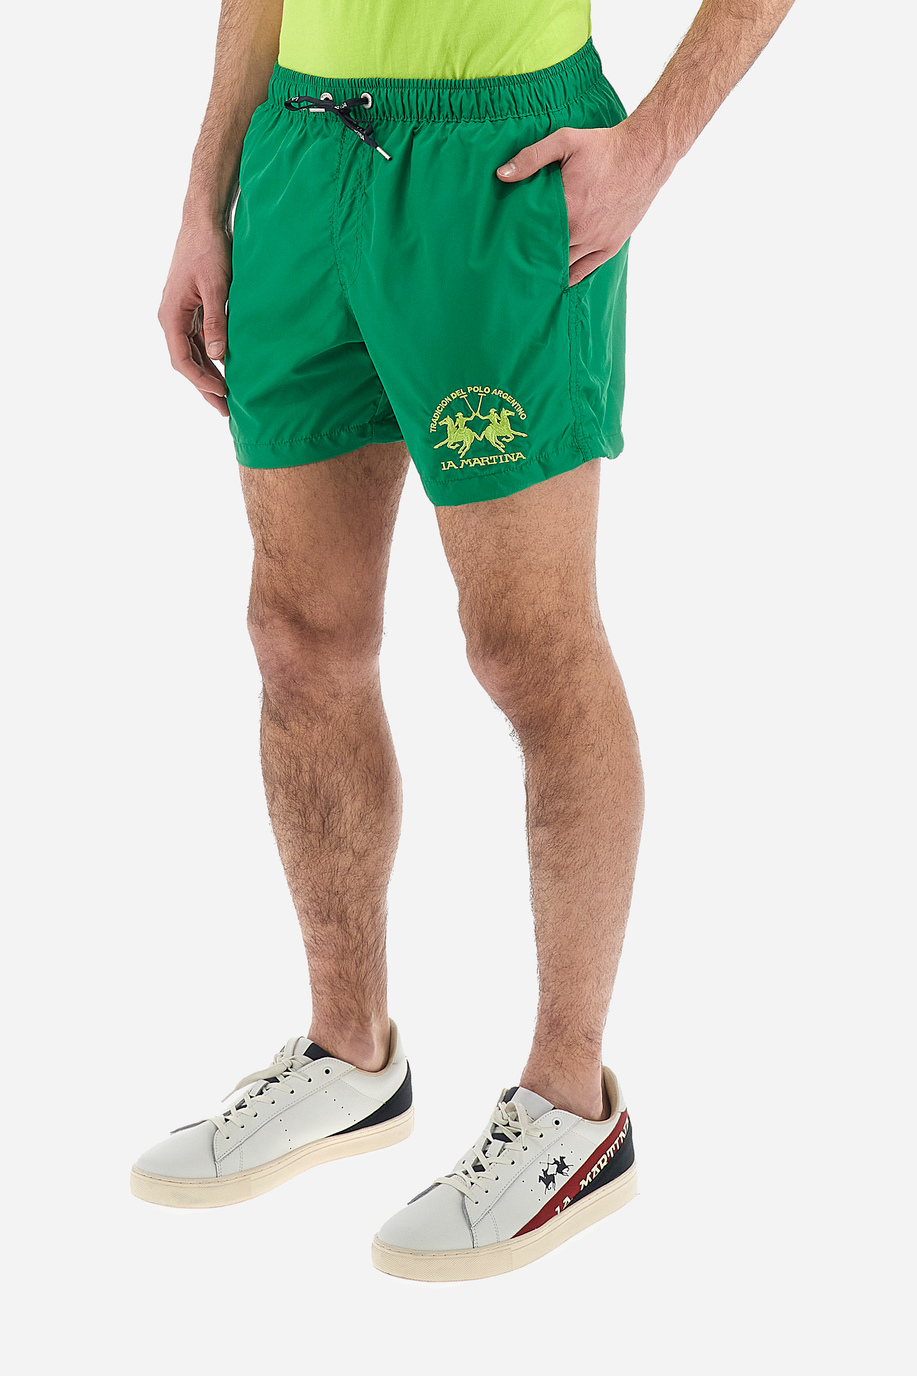 Regular fit men's swim trunks with drawstring waist - Vascotto - Swimwear | La Martina - Official Online Shop